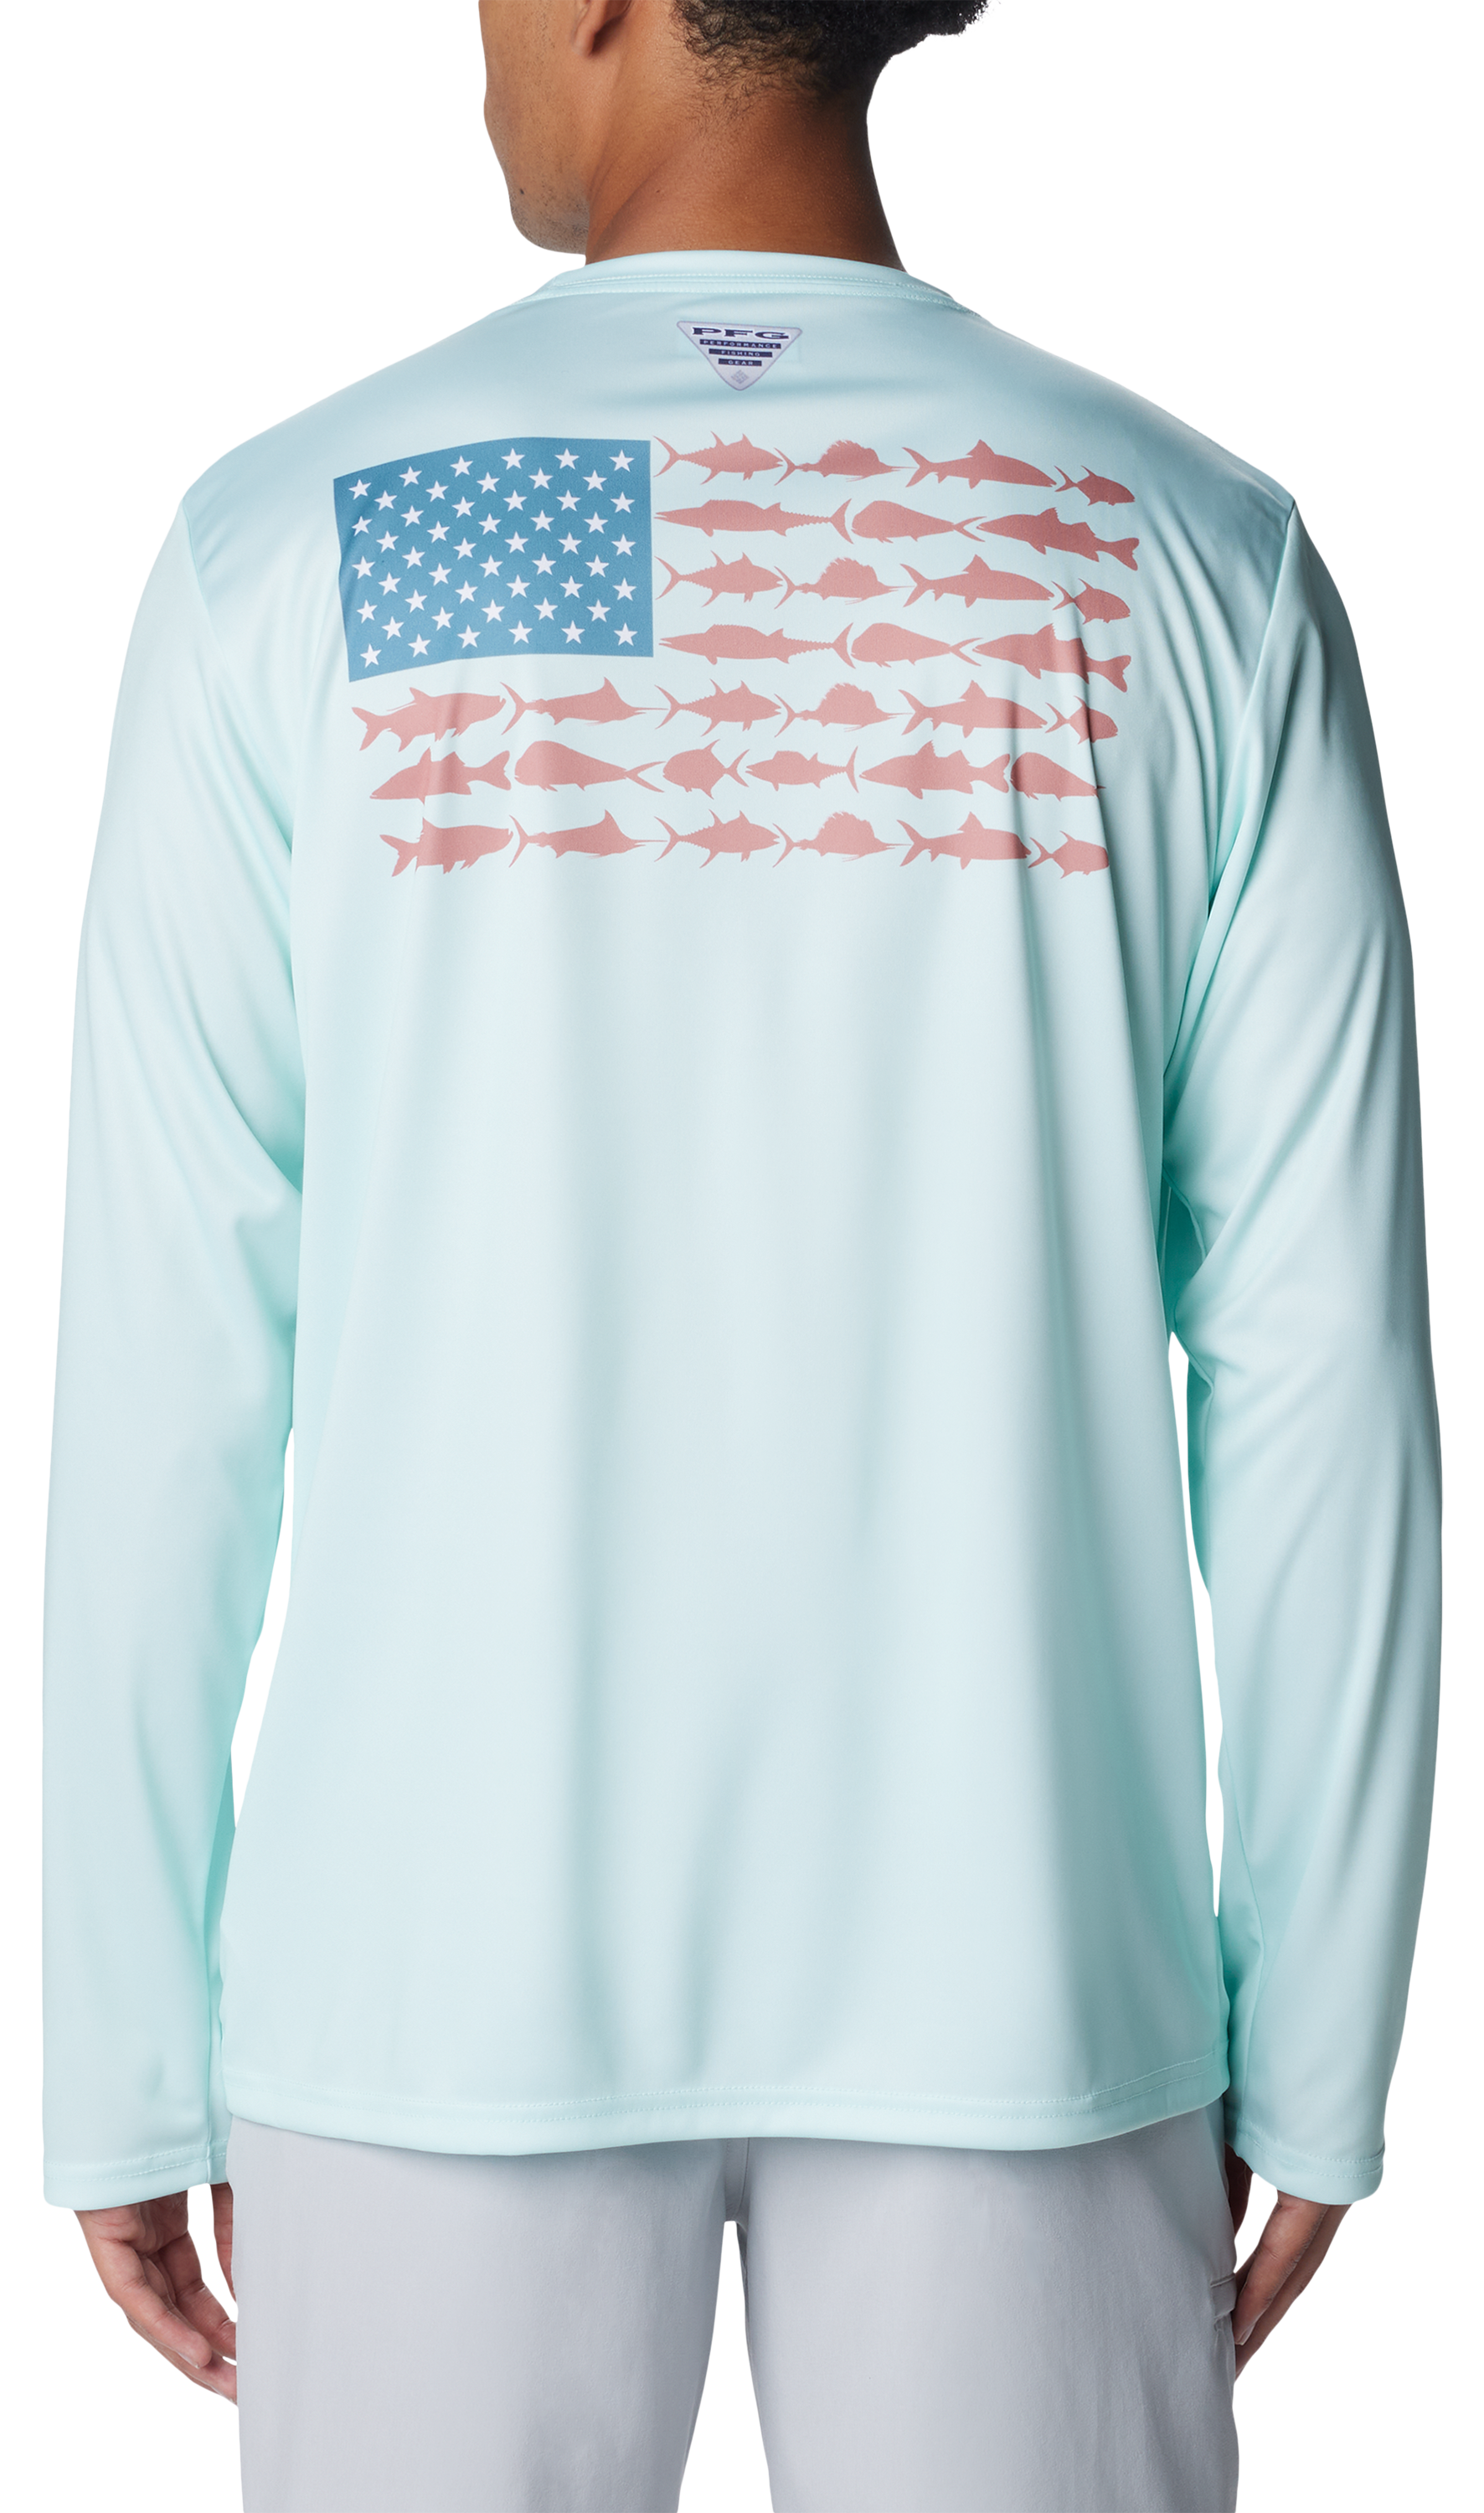 Aqua Design Long Sleeve Fly Fishing Shirt - Mens Camo Saltwater